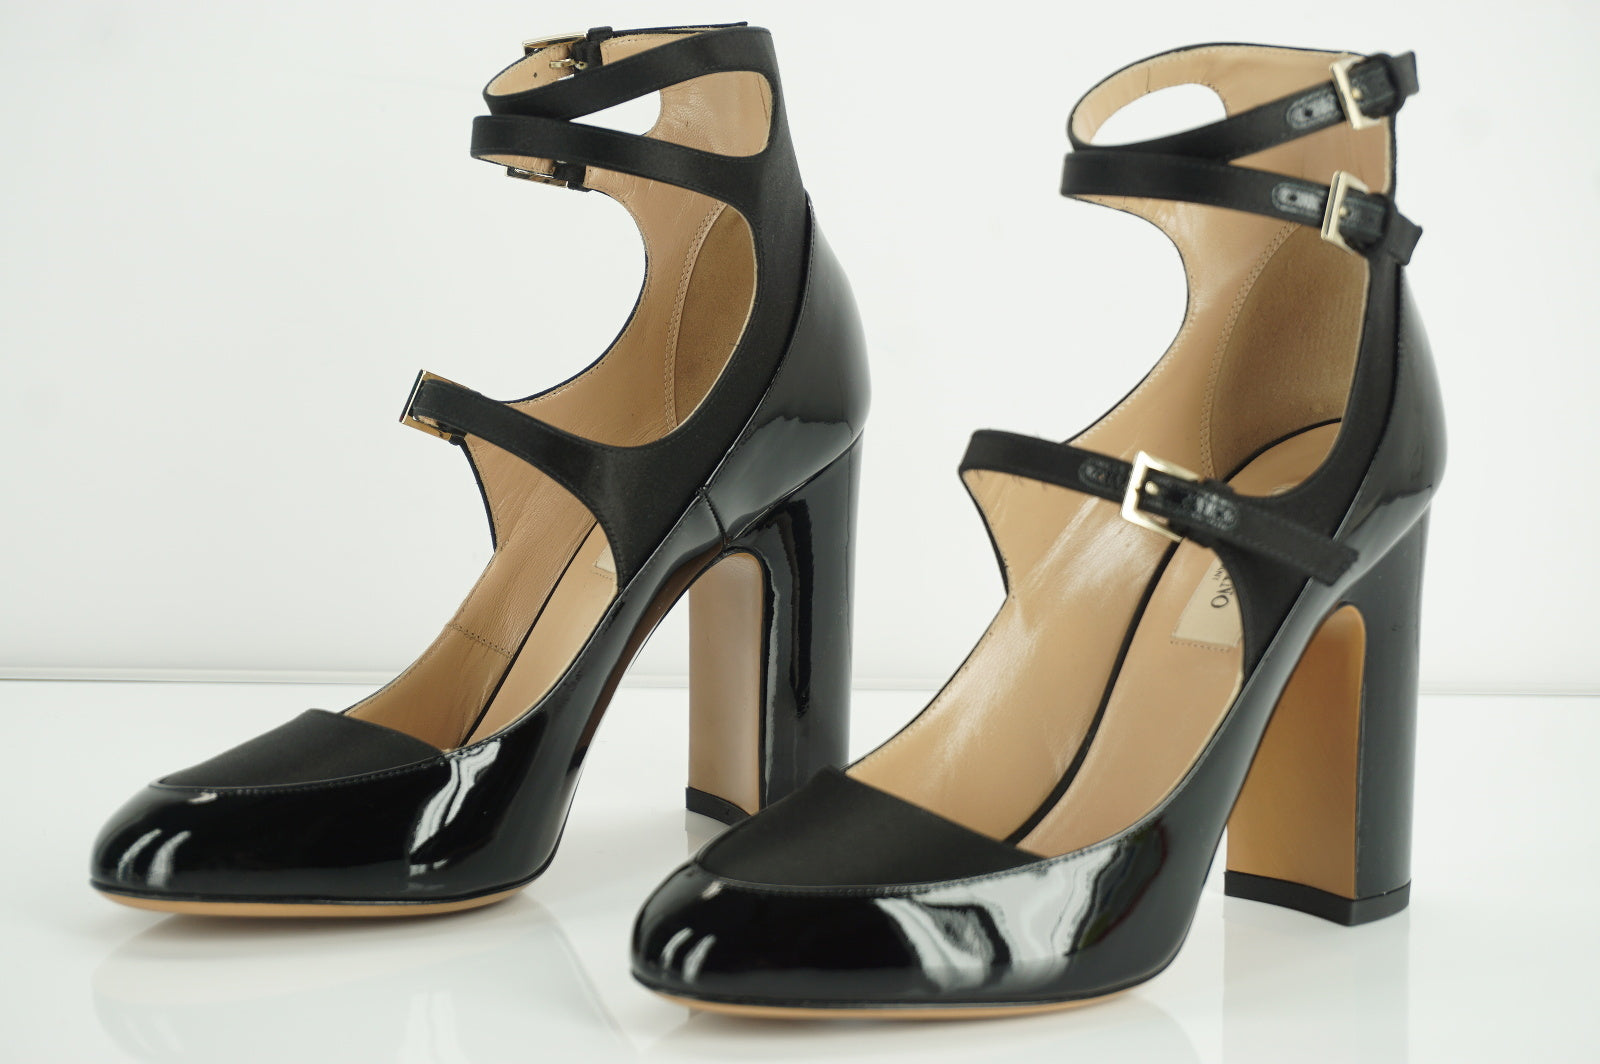 Valentino Garavani Ankle Strap Black Patent Satin Pumps Size 38.5 Heels $945